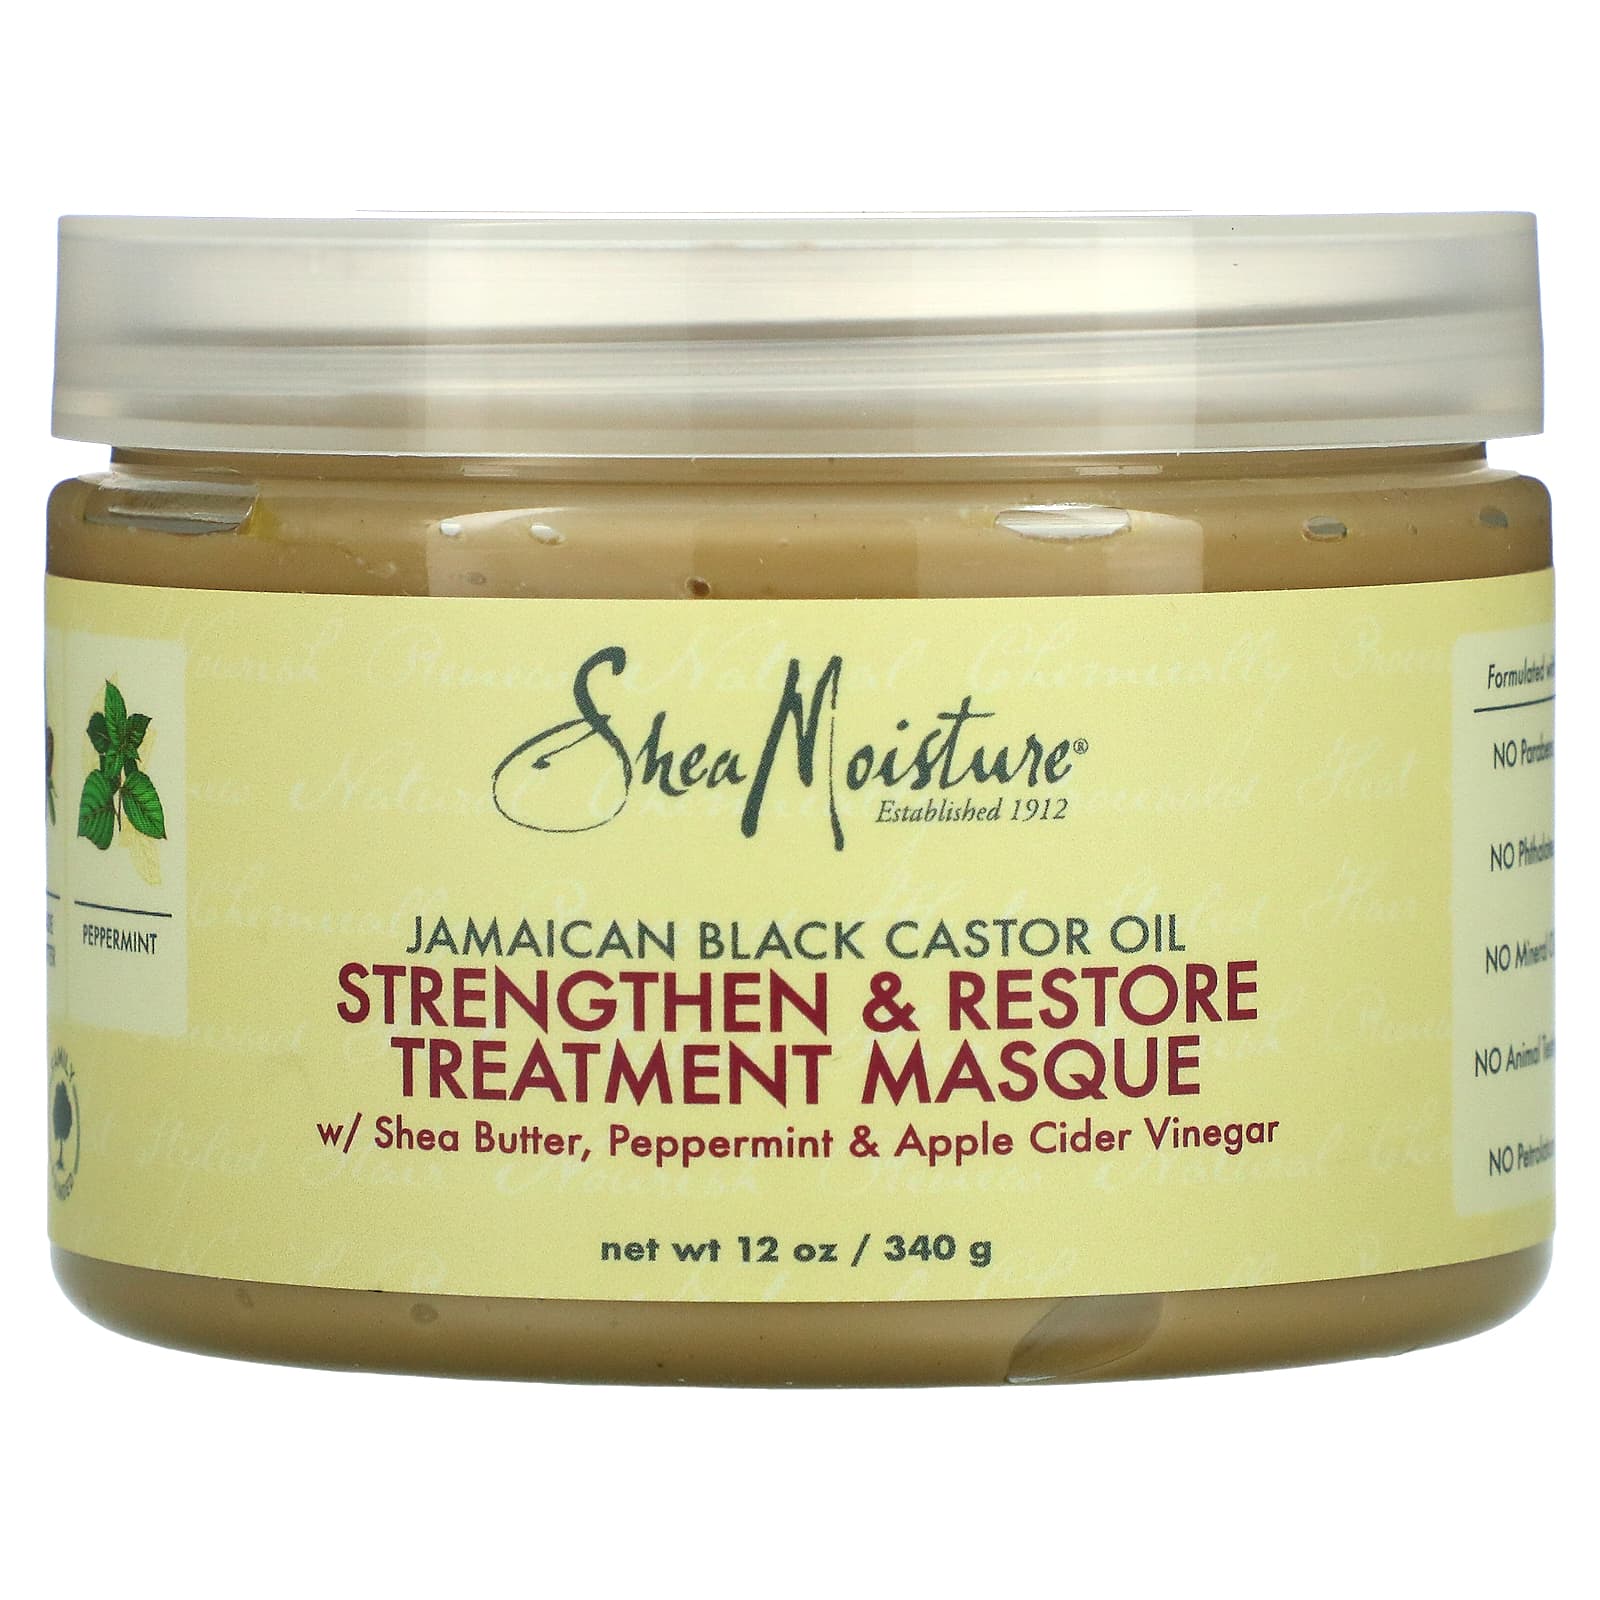 Shea moisture jamaican black castor oil masque strengthen and restore treatment for hair - 12 oz (340 g)